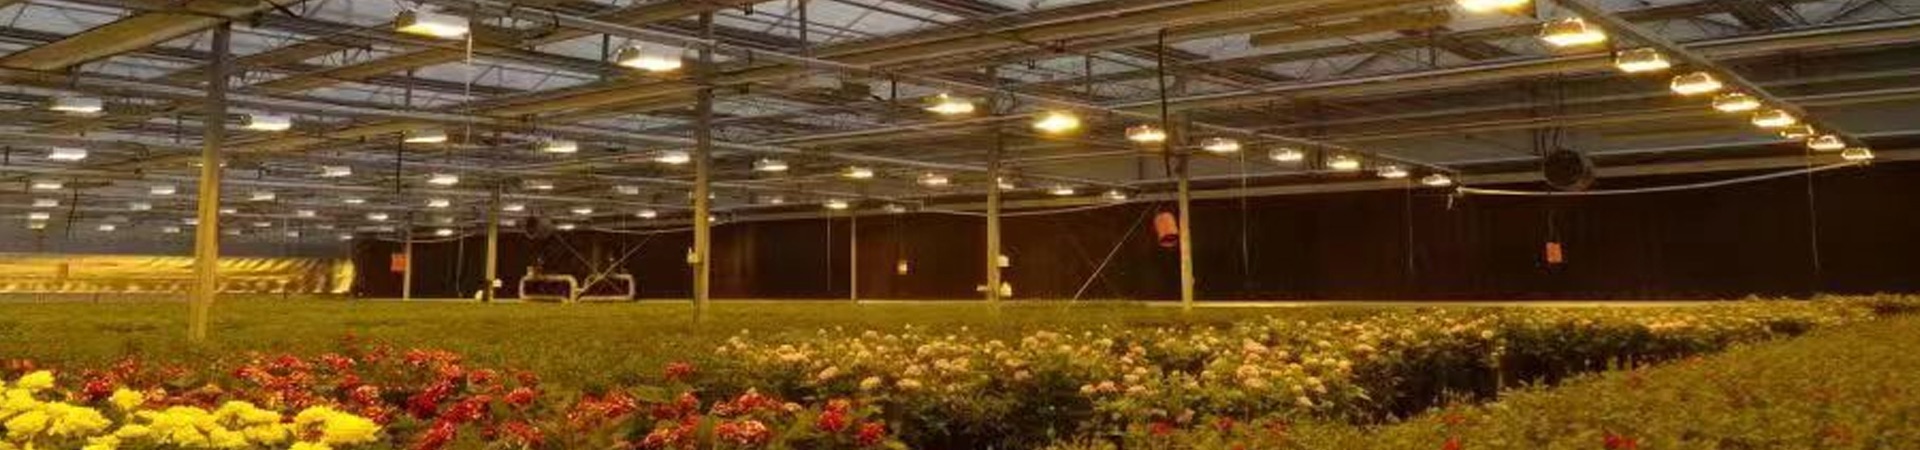 Plant Lighting Measurement Systems